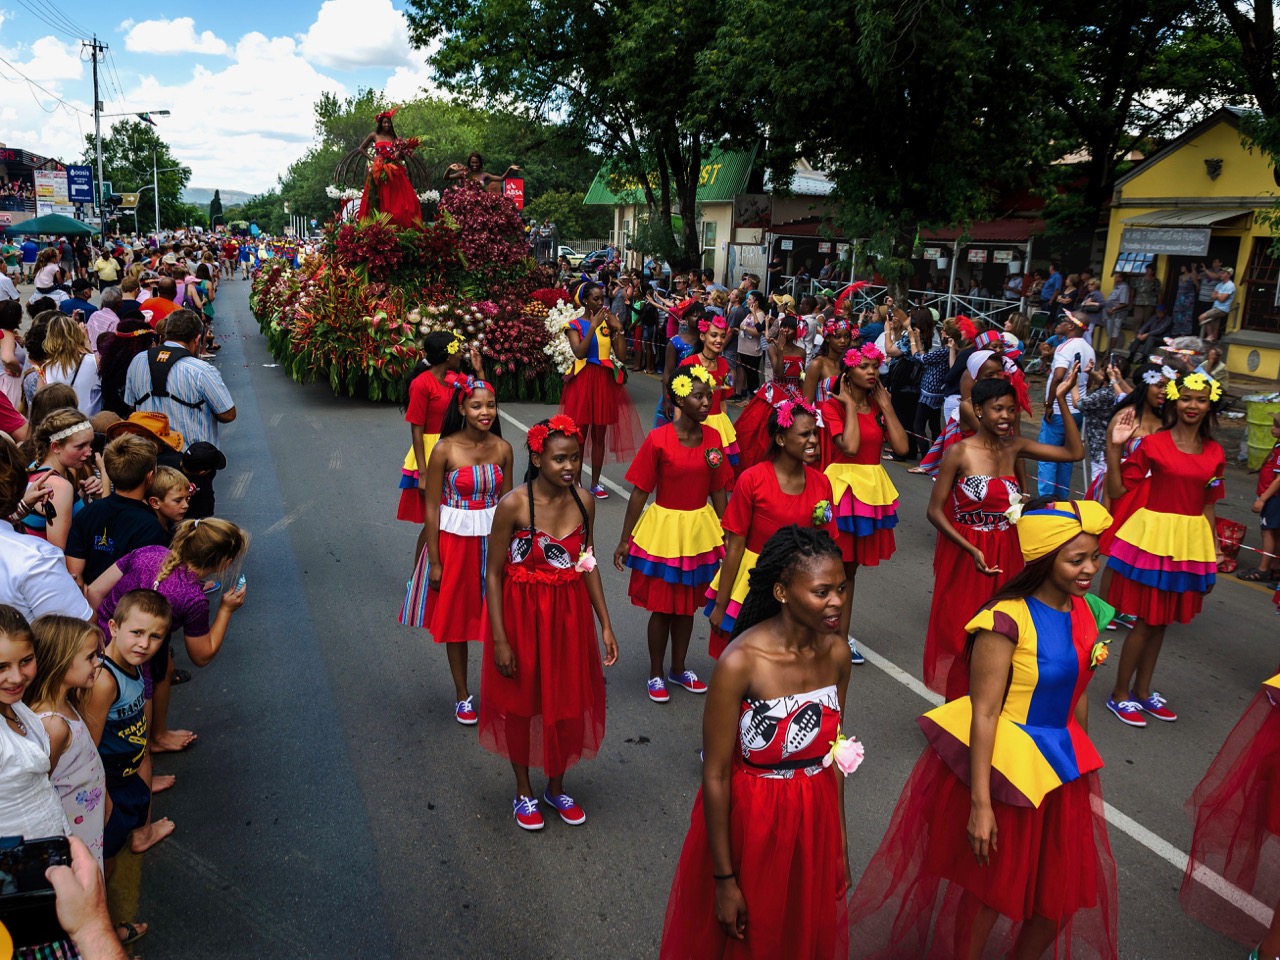 Have street parades. Уличный парад. Мартиника карнавал. Устраивать уличные парады. Картинки уличные парады.